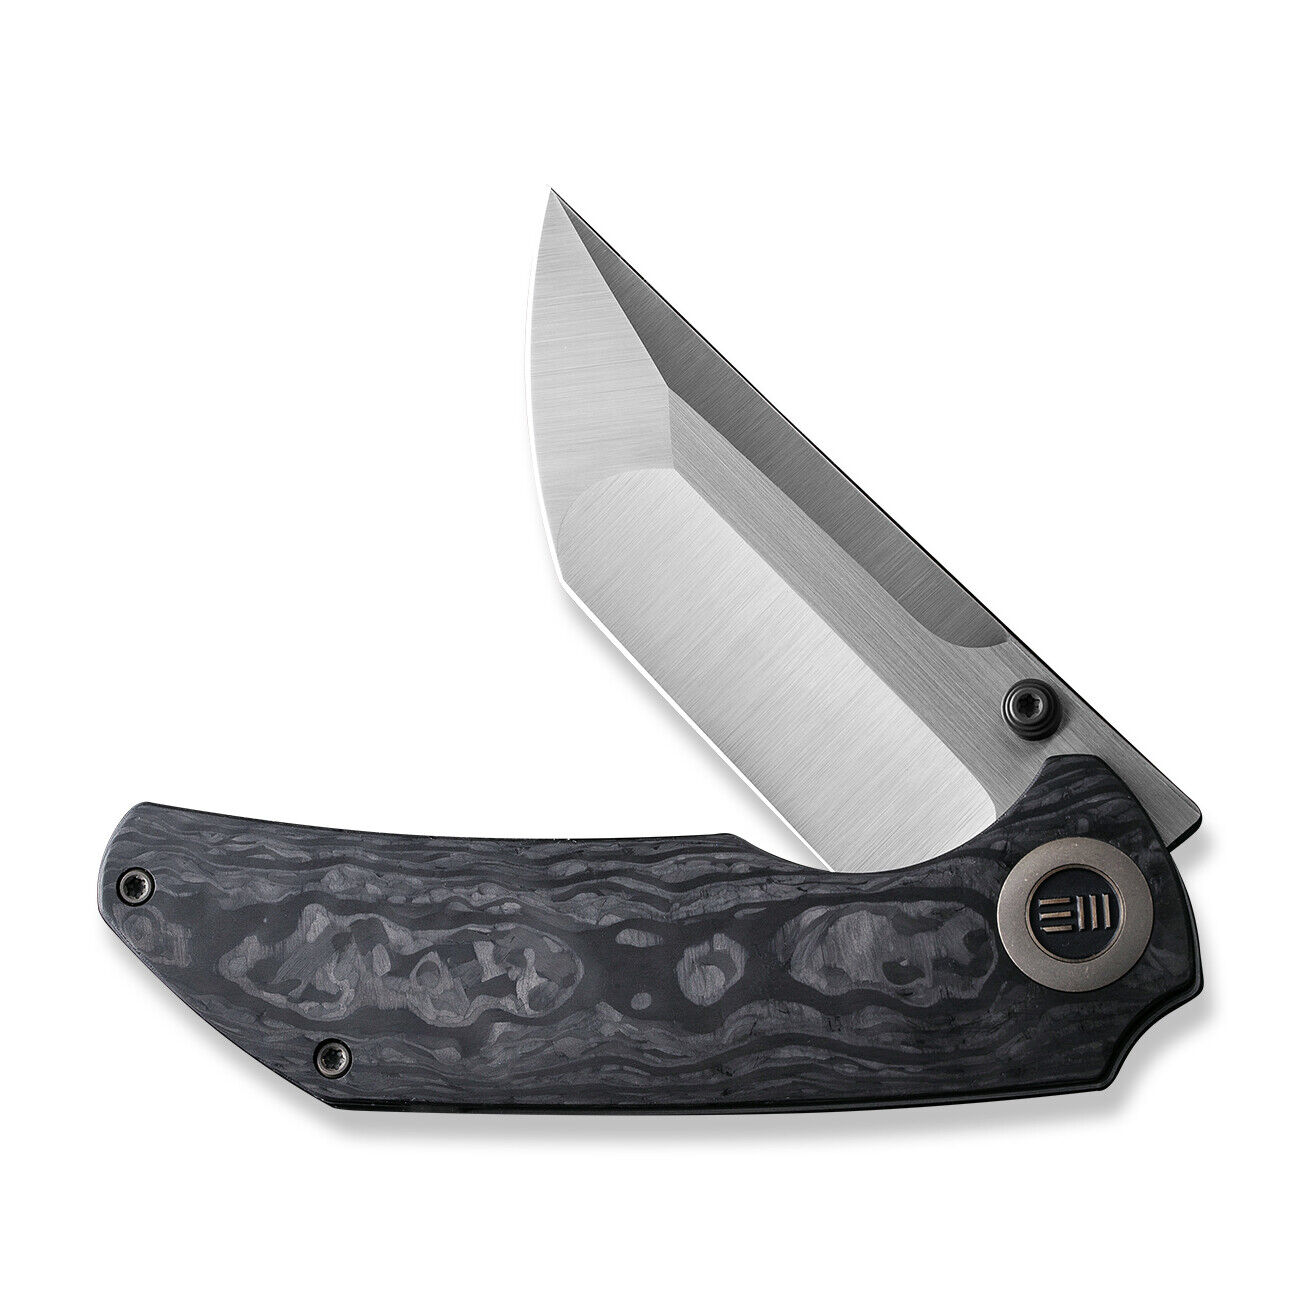 WE Knife Thug XL 20028E-1 Shed Carbon Fiber Titanium 20CV Steel Pocket Knives